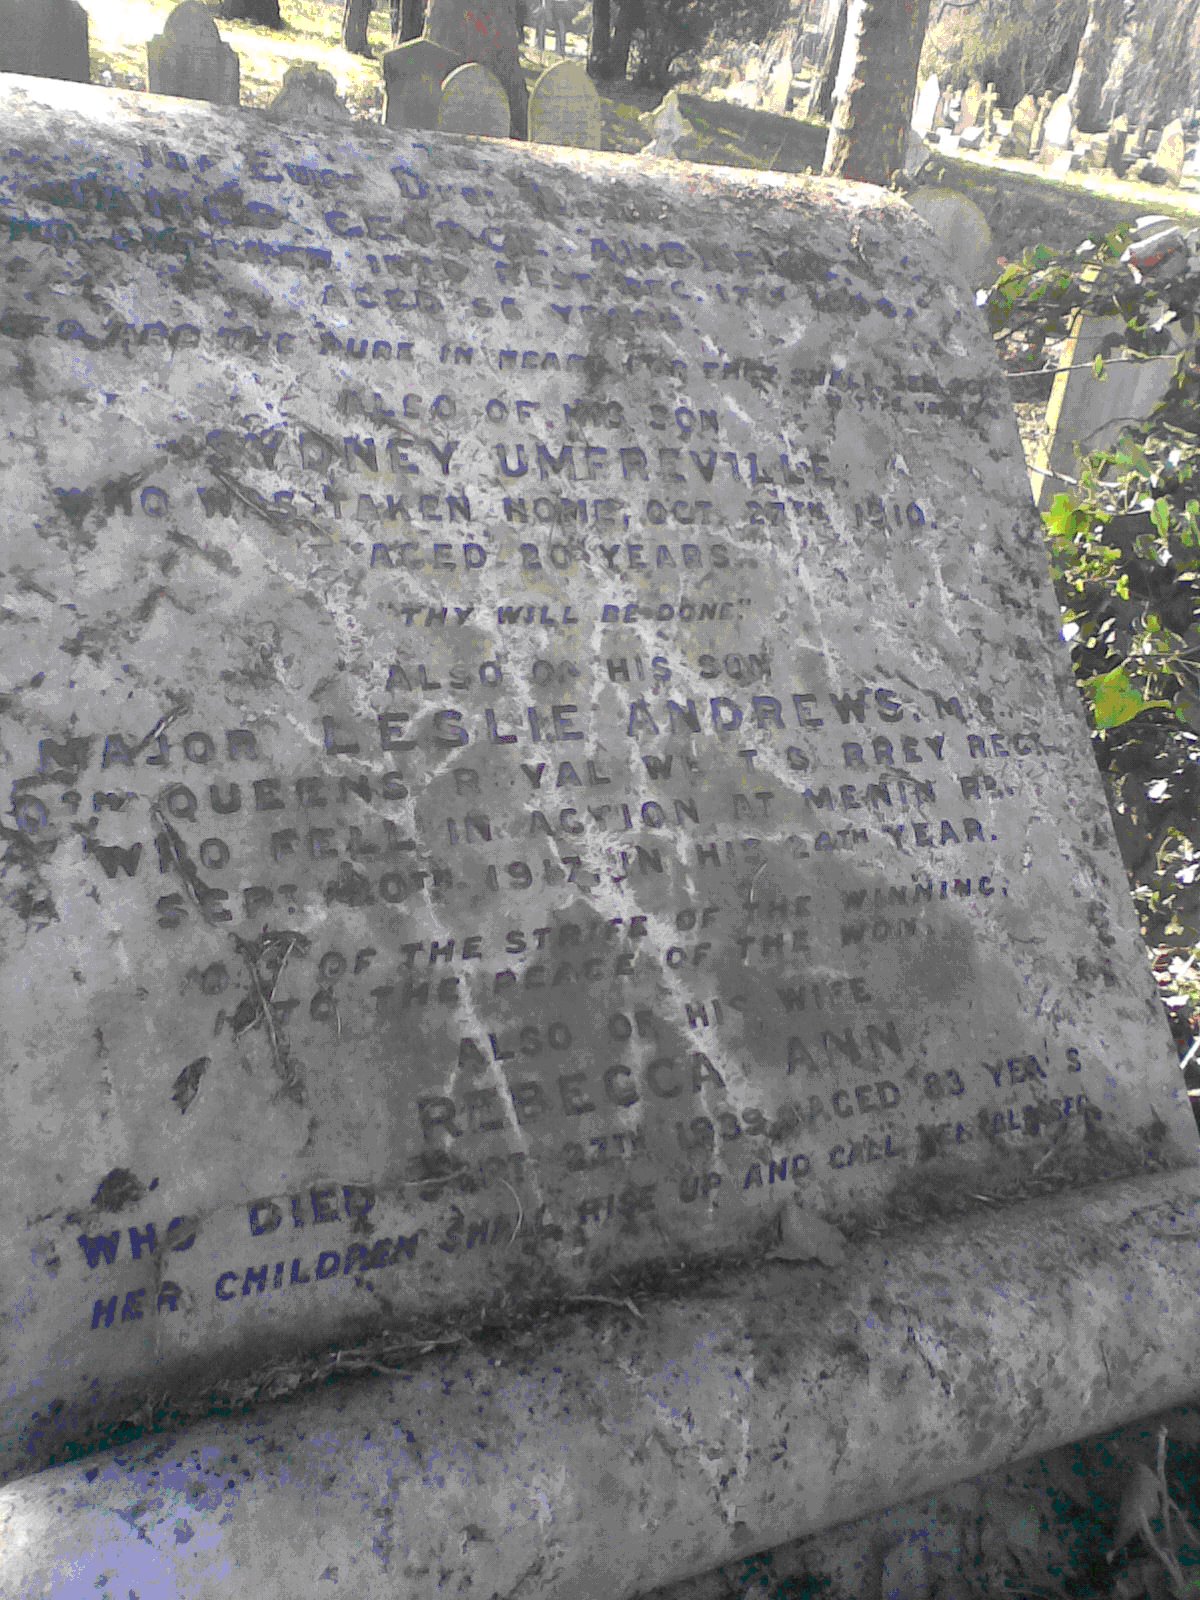 Major Leslie Andrews gravestone